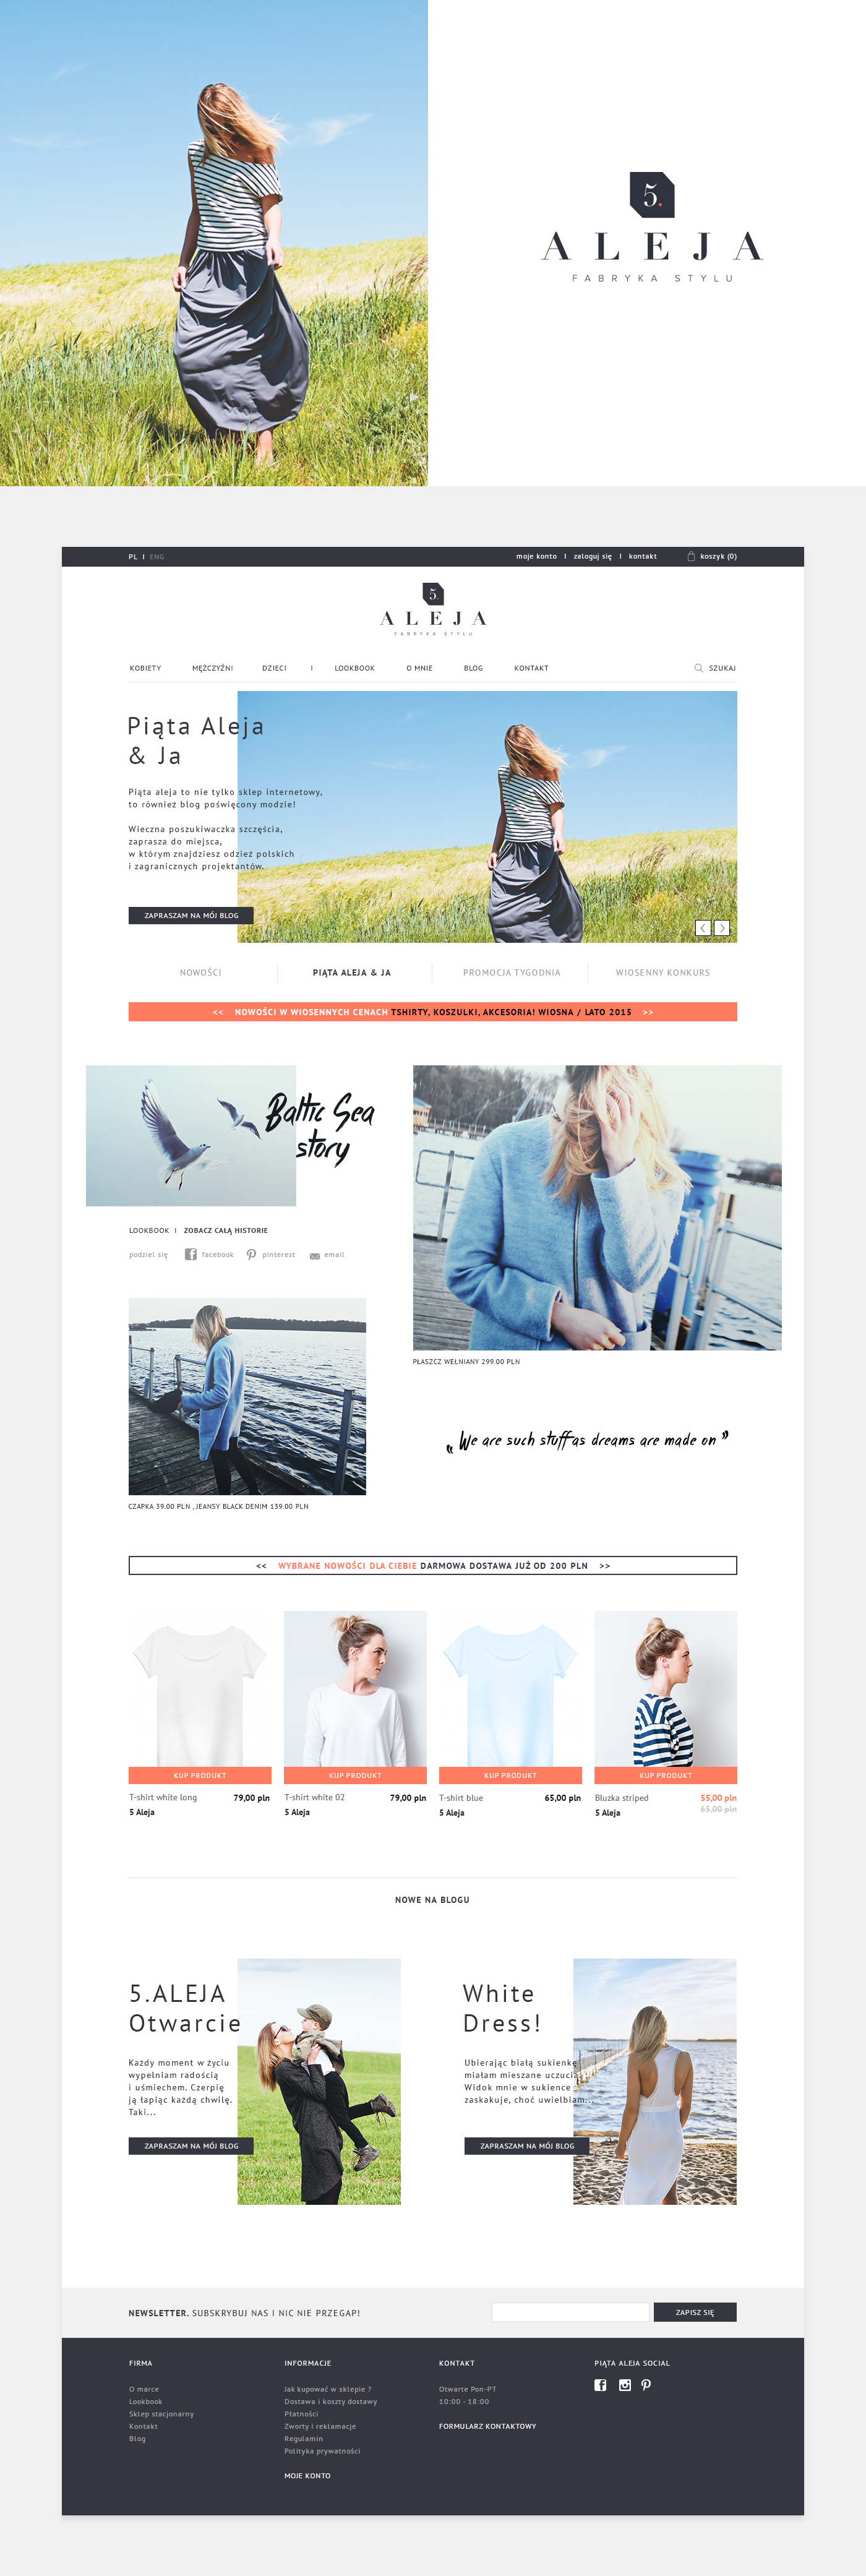 Online shop Ecommerce shop ux/ui Webdesign Web minimal Fashion Store clothes